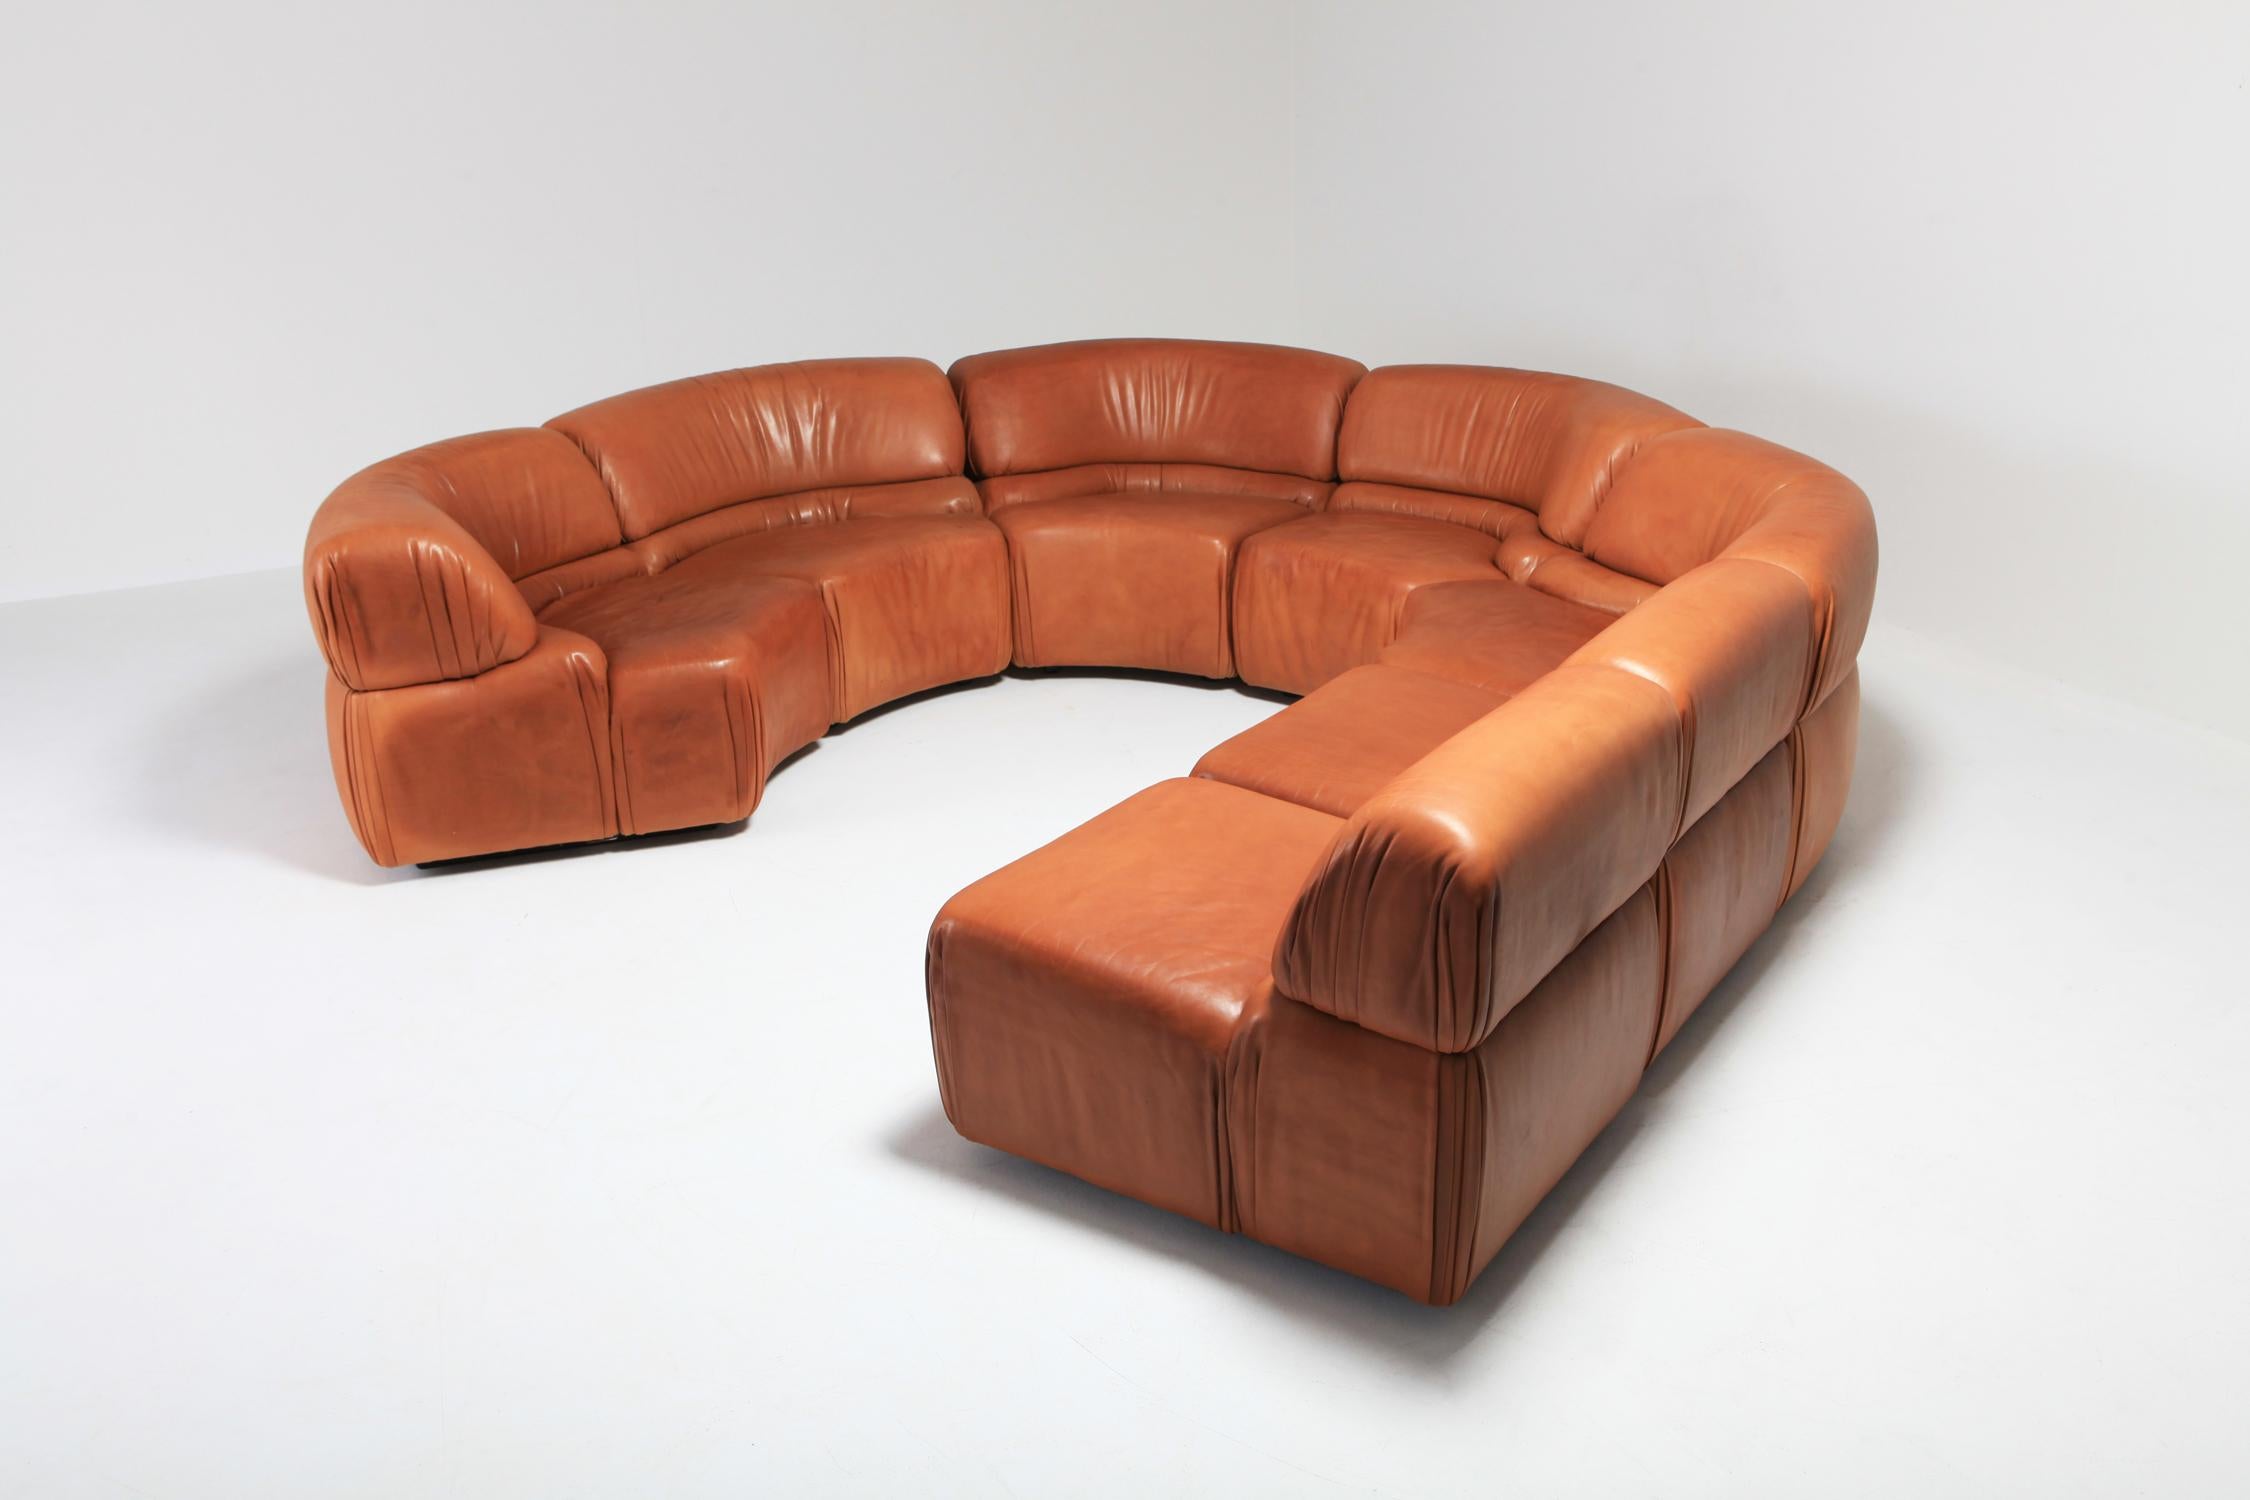 'Cosmos' Sectional Cognac Leather Sofa by De Sede, Switzerland 1